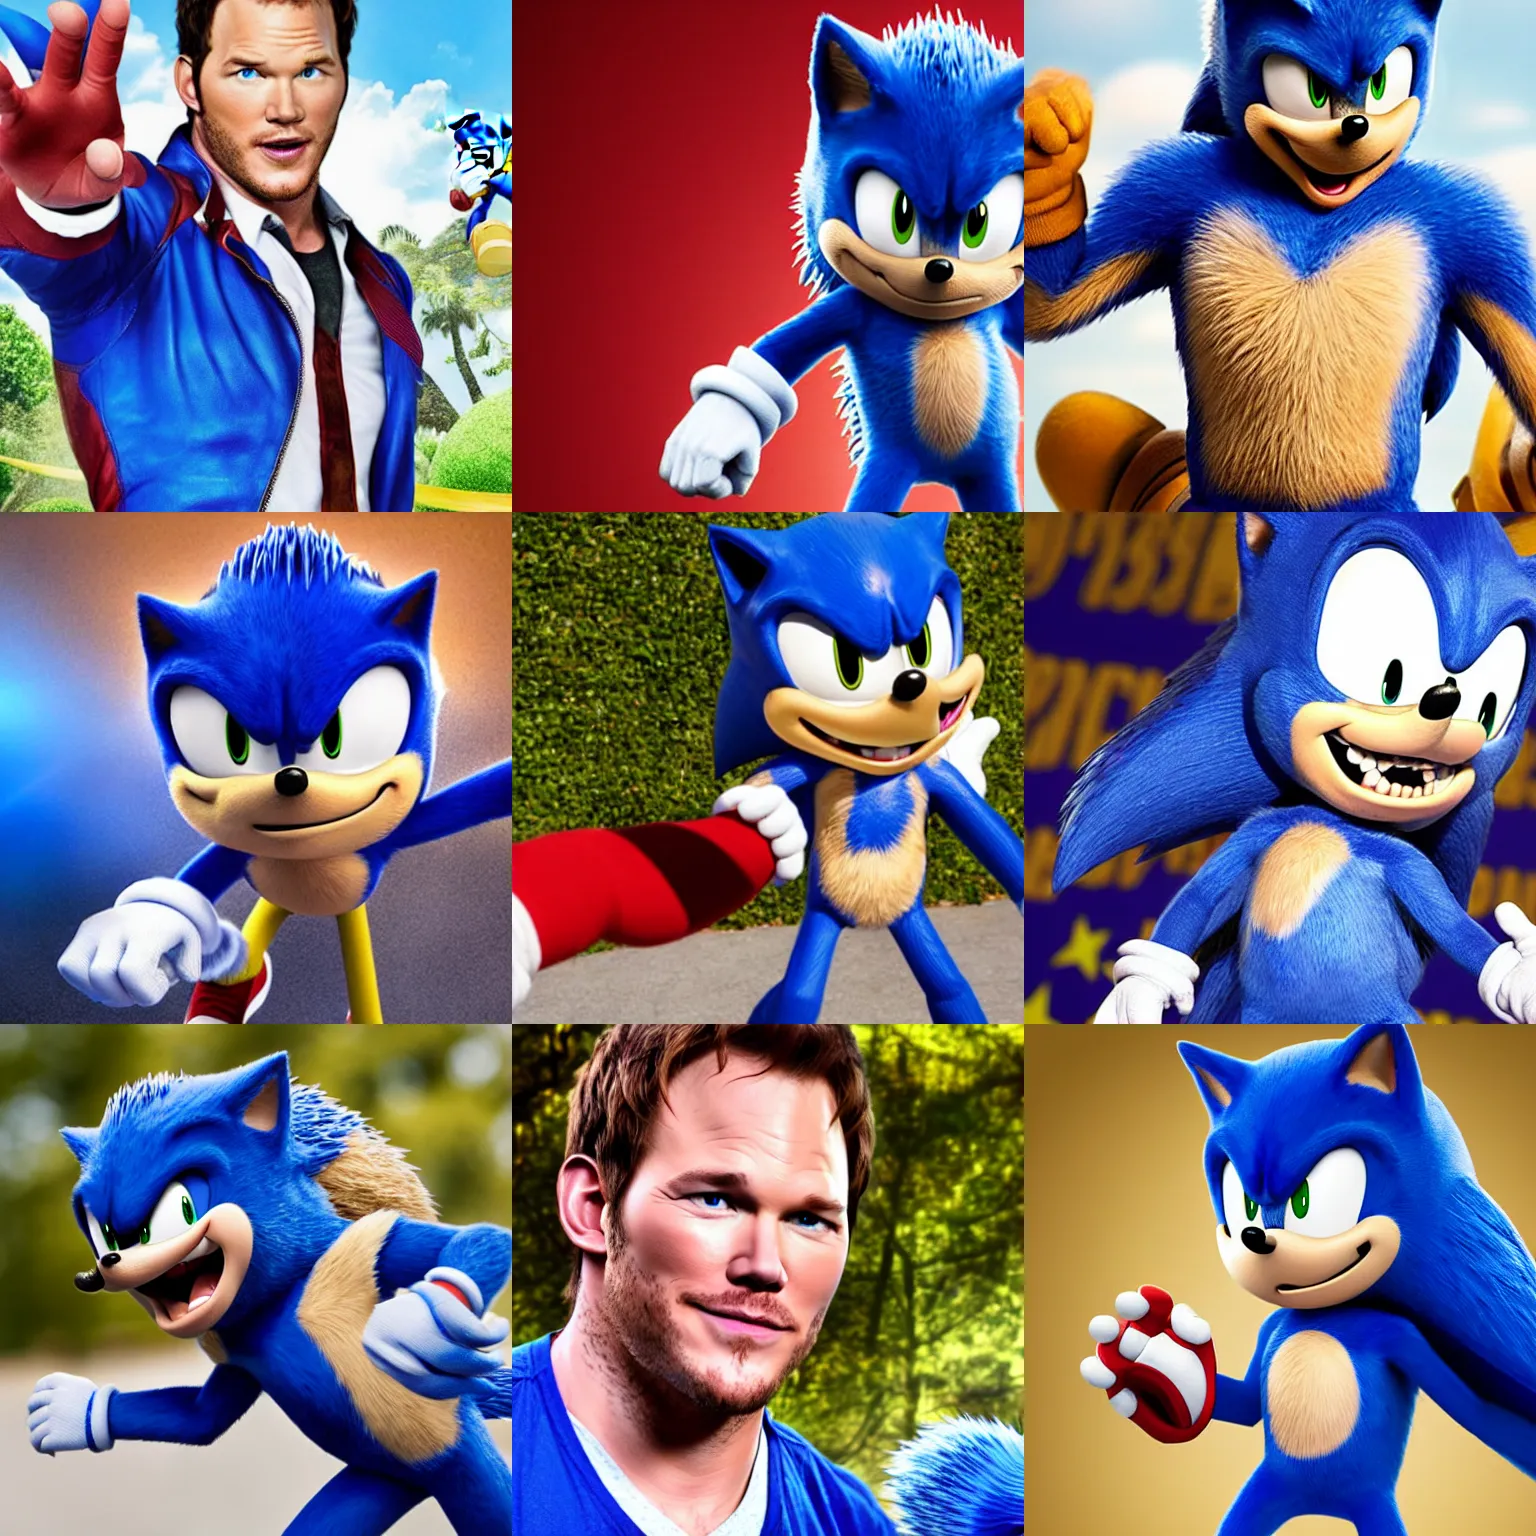 Prompt: Chris Pratt as Sonic the Hedgehog, photograph